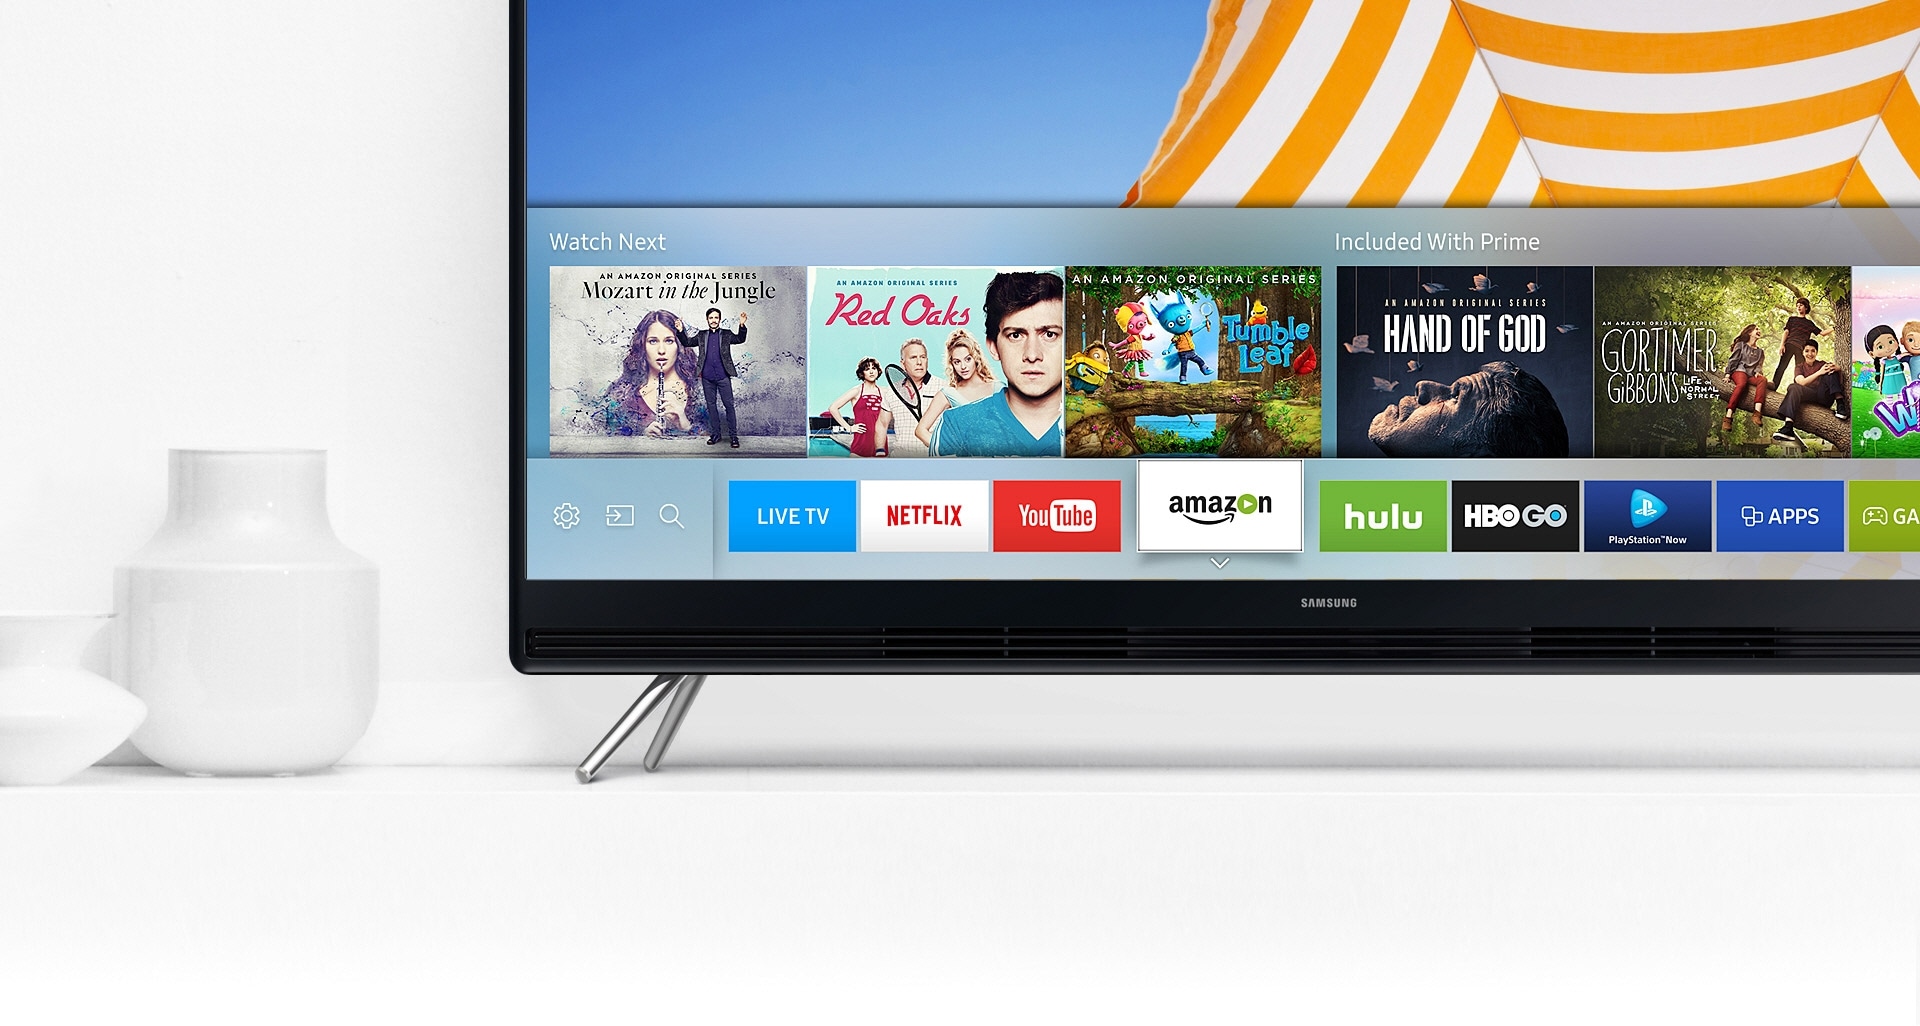 Full HD Flat Smart TV K5300 Series 5 | UN40K5300AFXZP | Samsung Caribbean